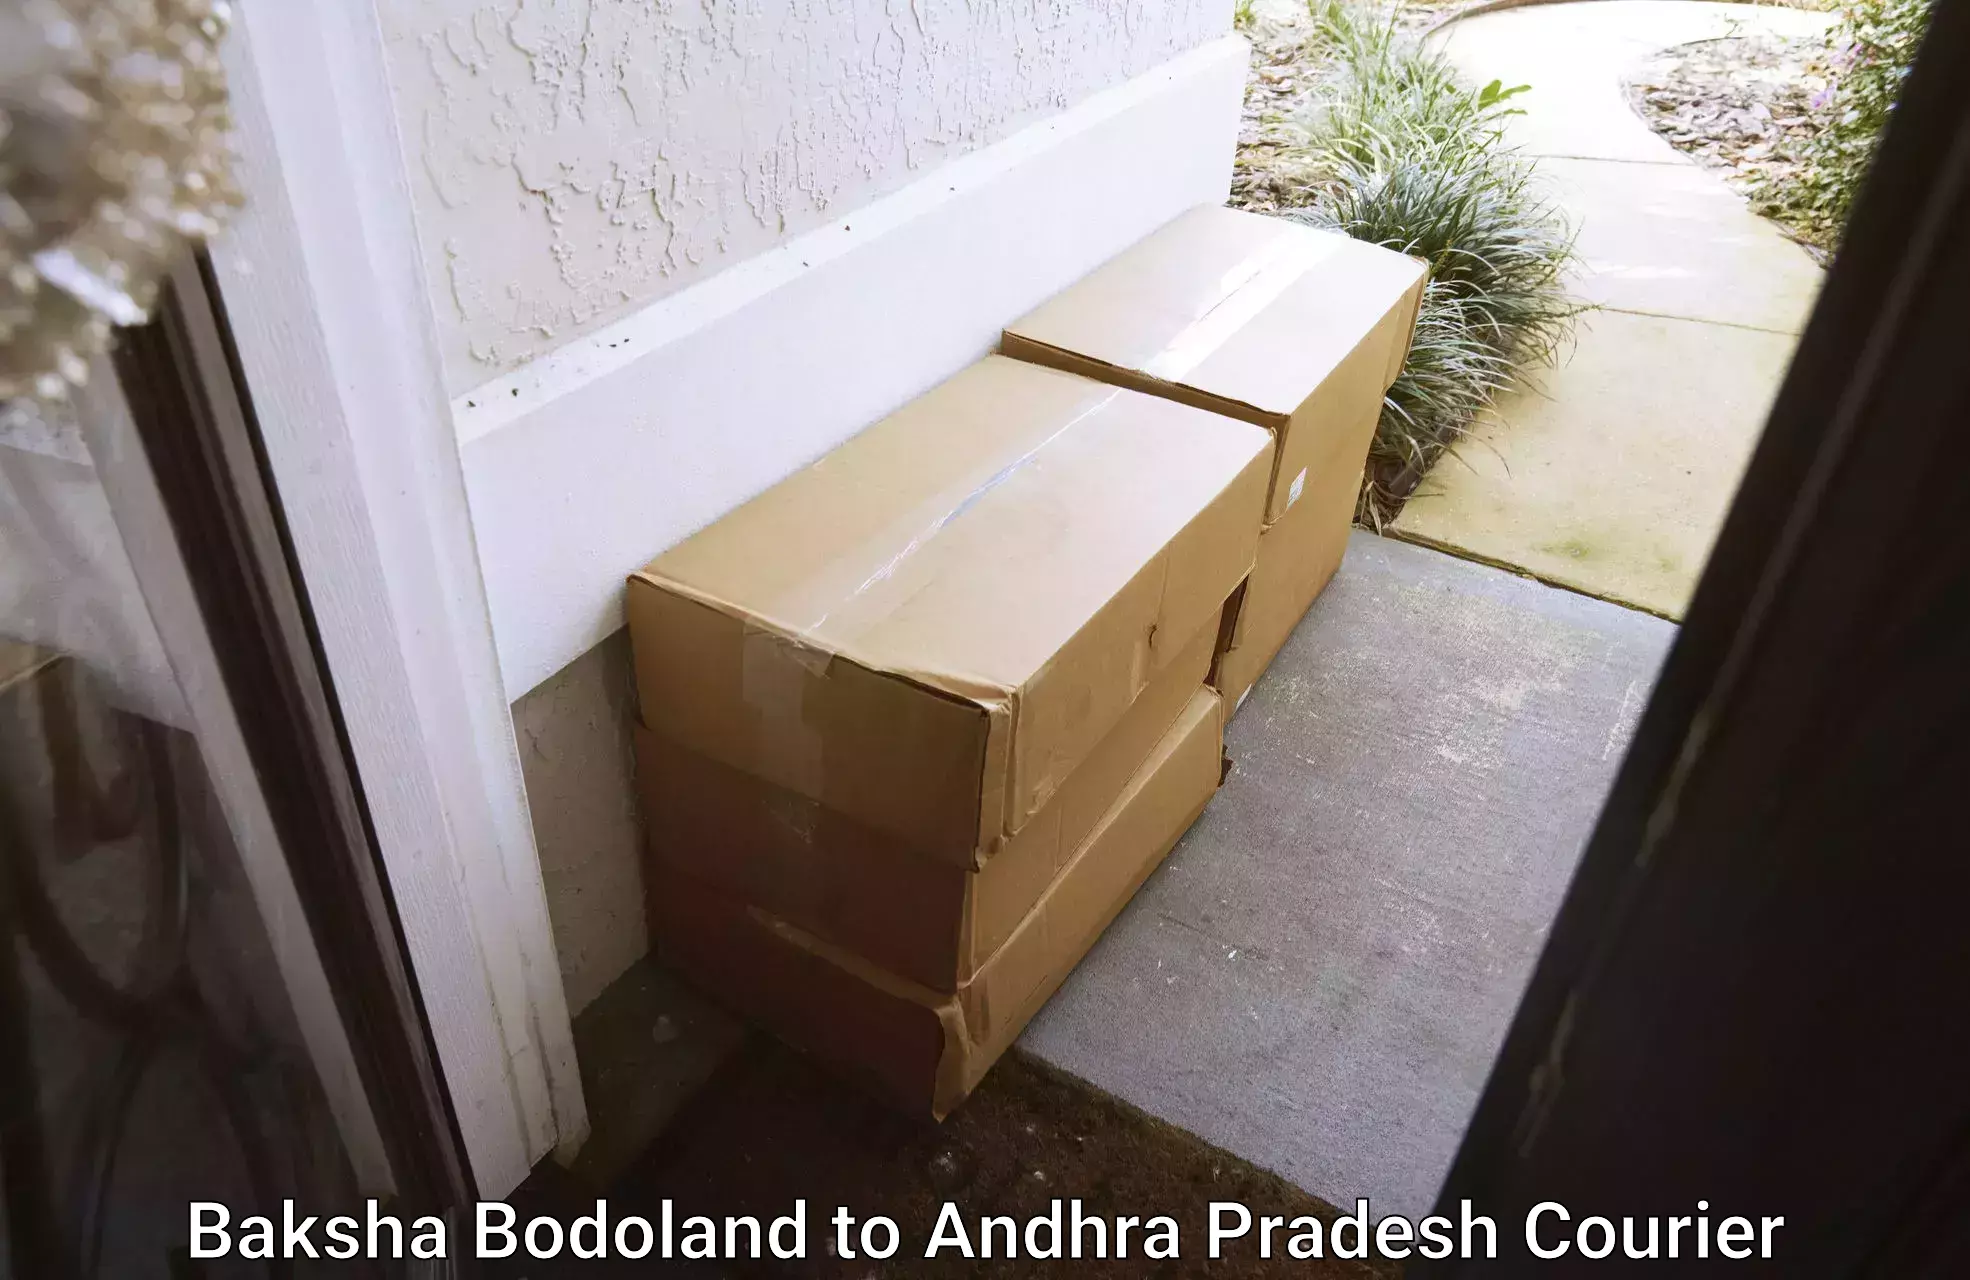 Full-service courier options Baksha Bodoland to Madanapalle